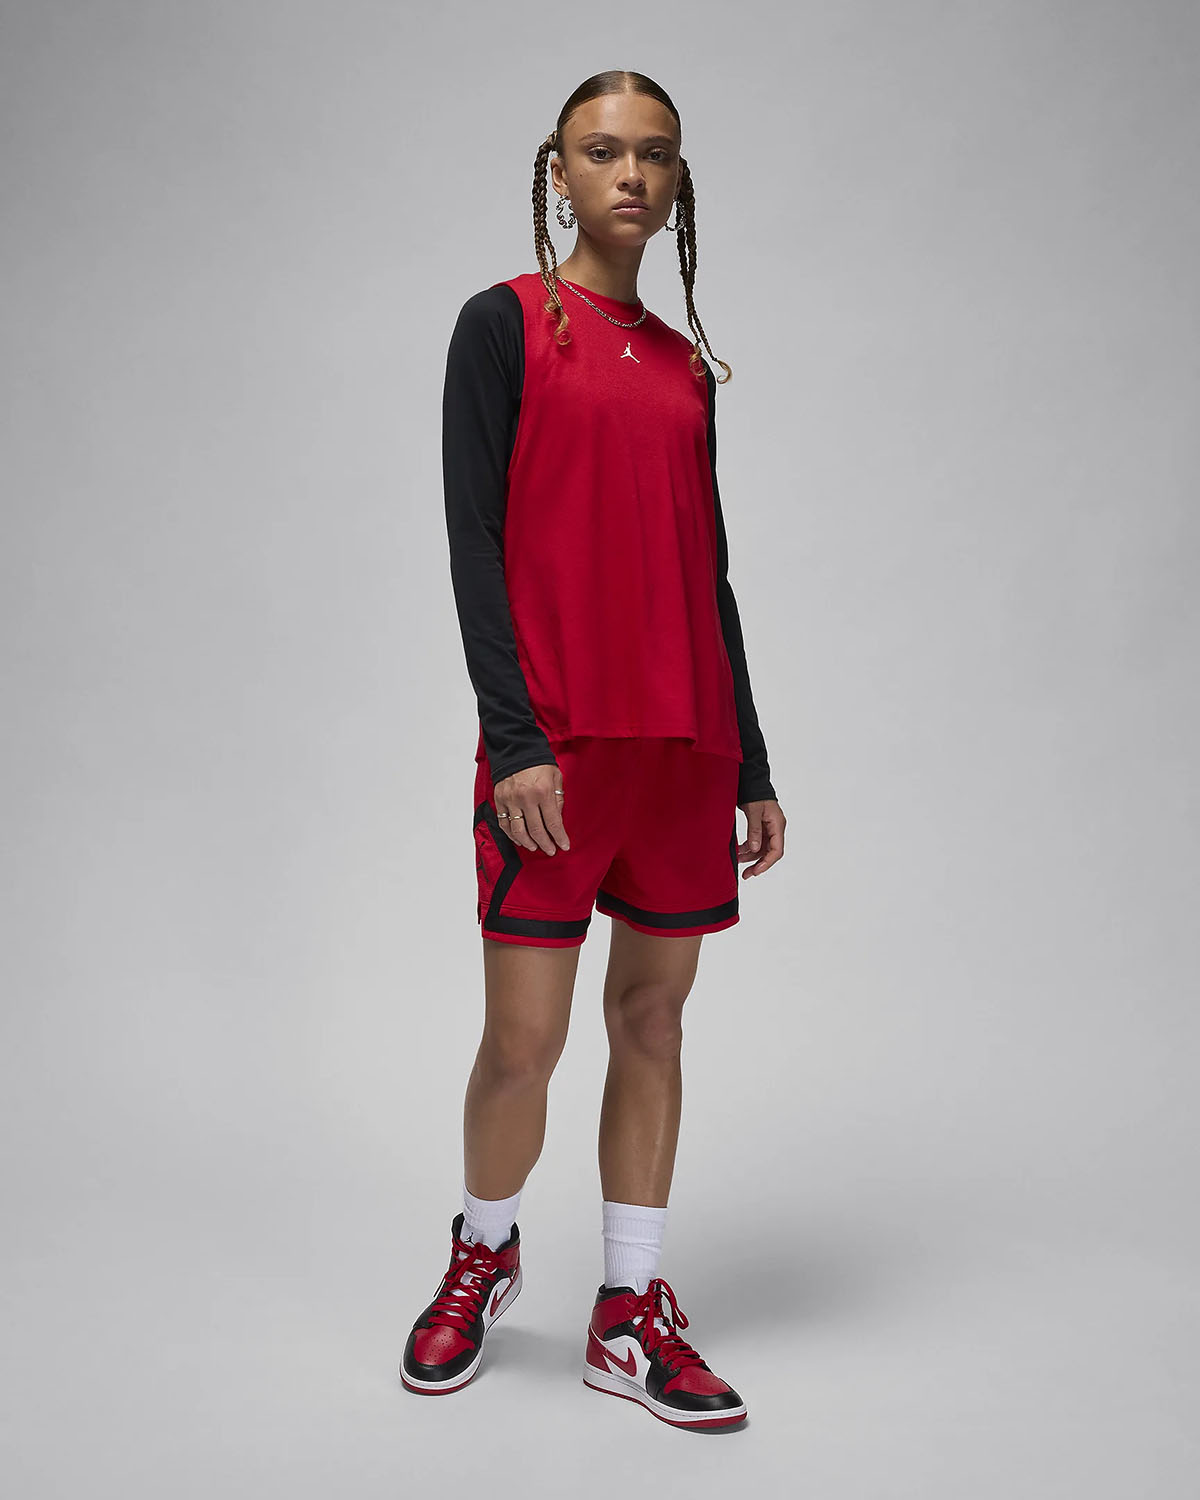 Jordan Womens Diamond Shorts Gym Red Black Sneaker Outfit